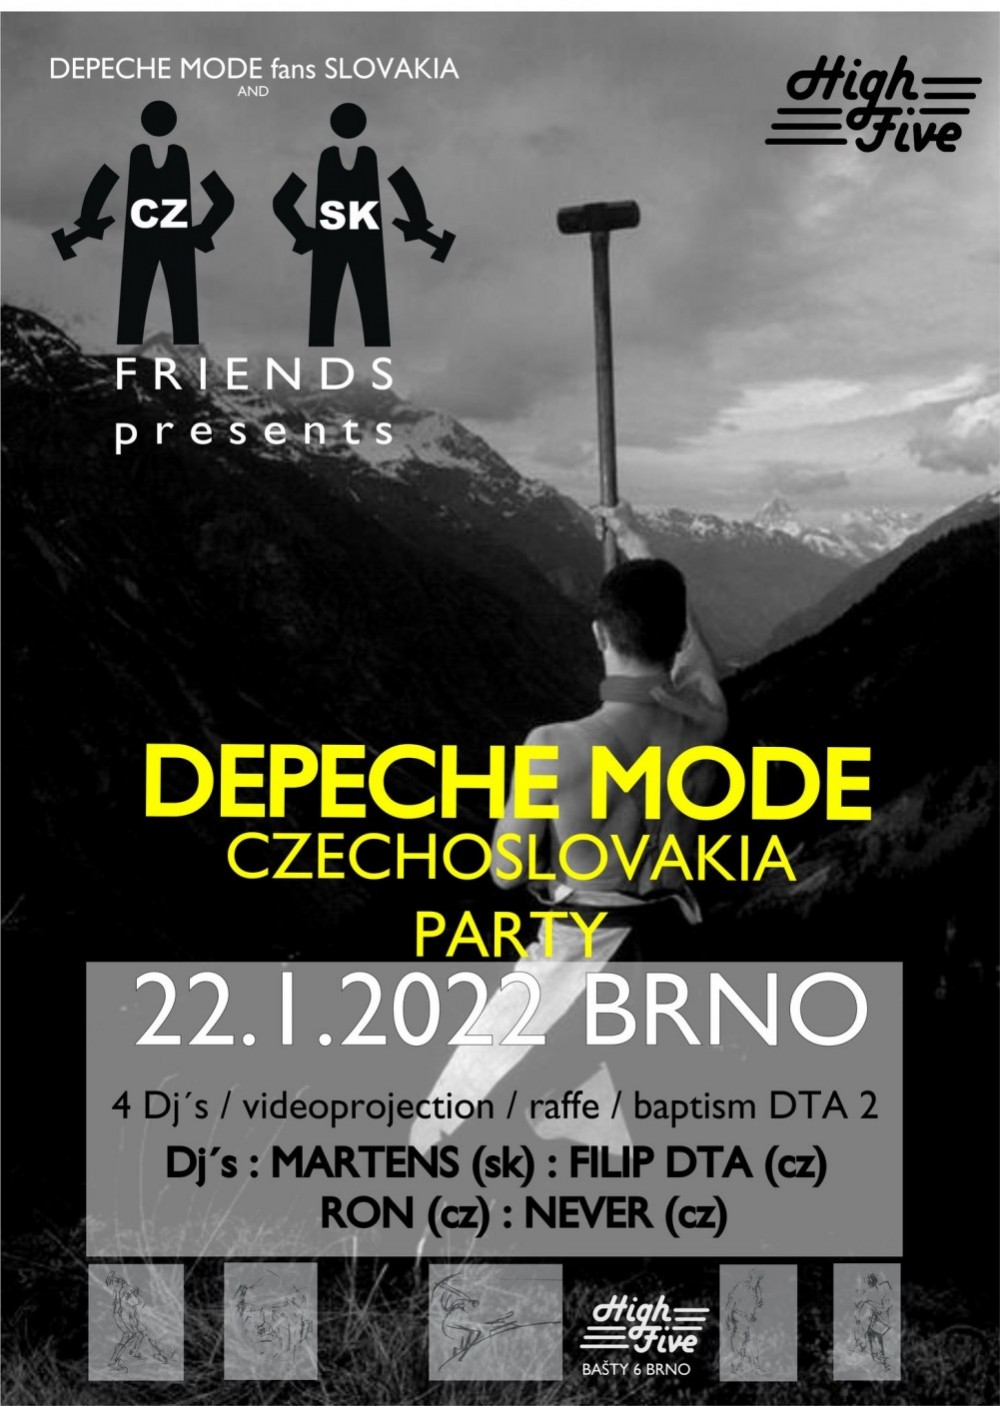 Plagát akcie: Depeche Mode CzechoSlovakia party